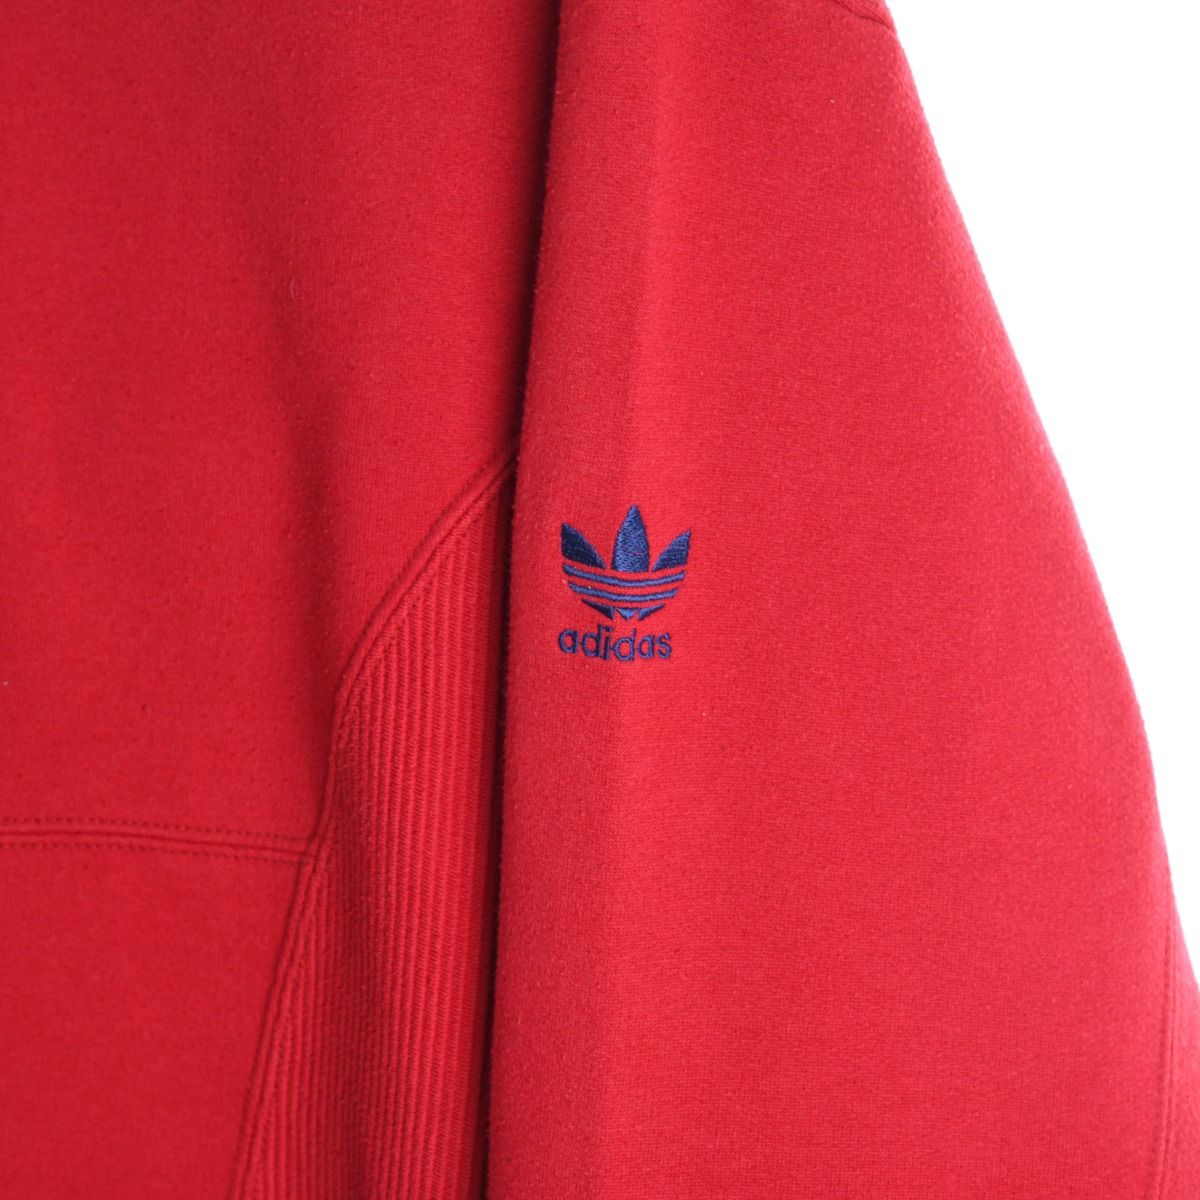 Adidas Golf 1990s Sweatshirt